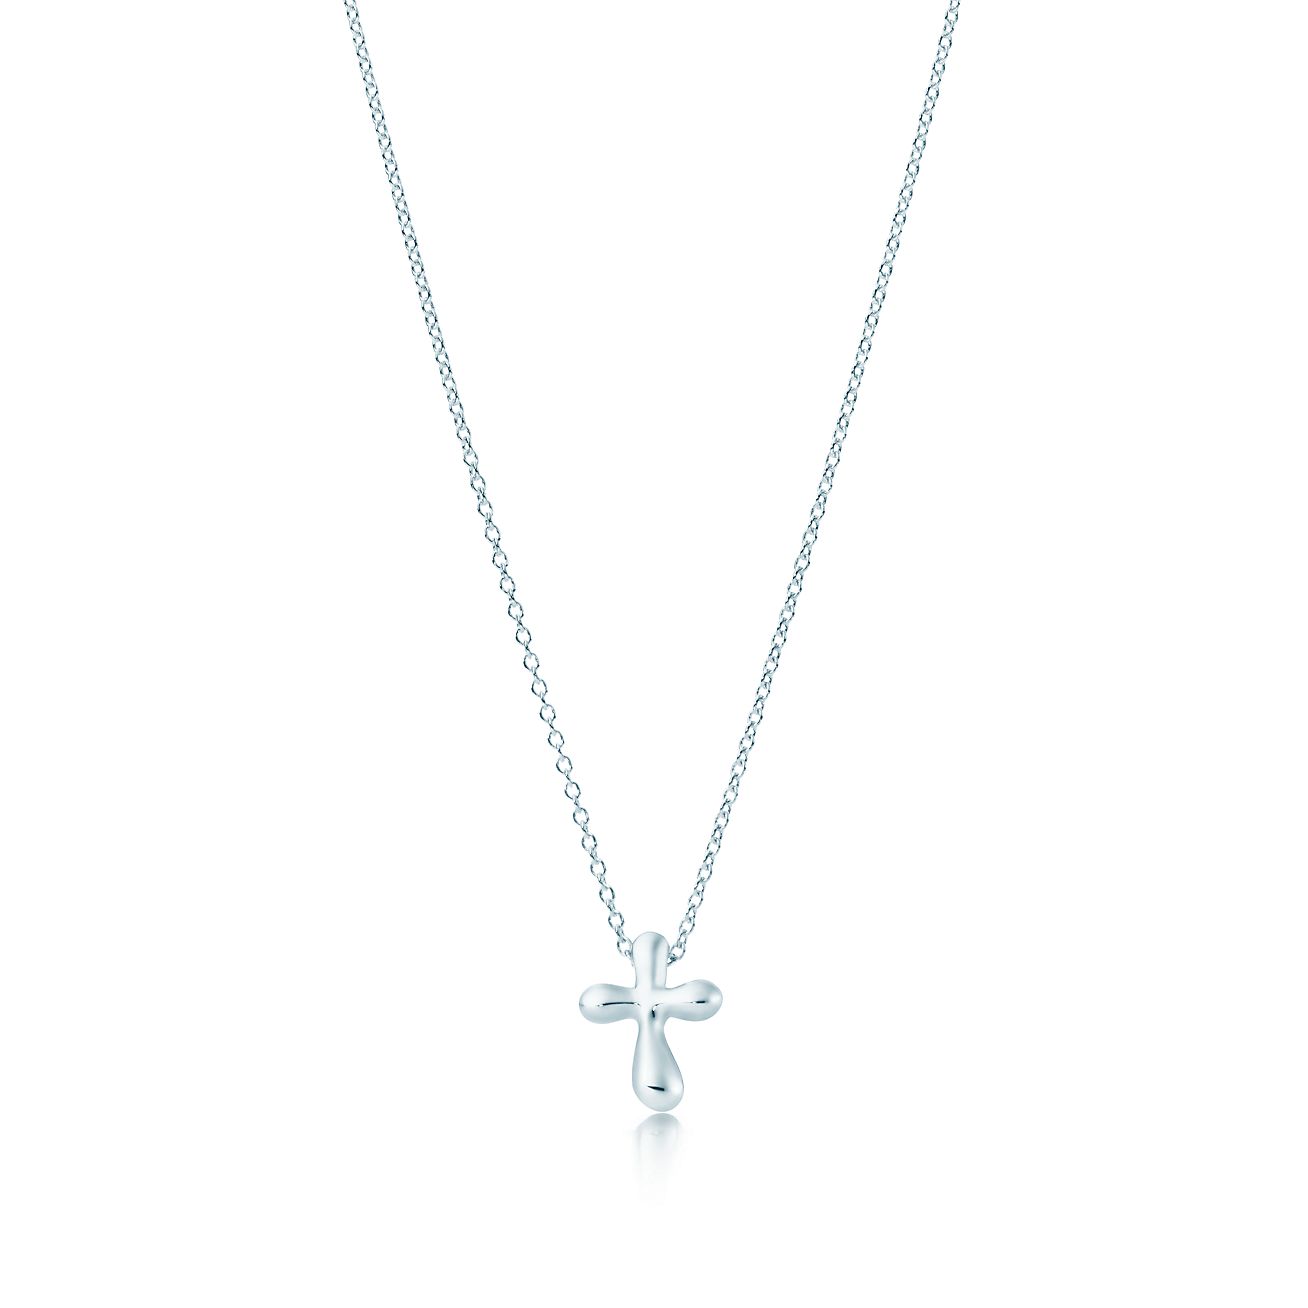 tiffany necklace cross pendant